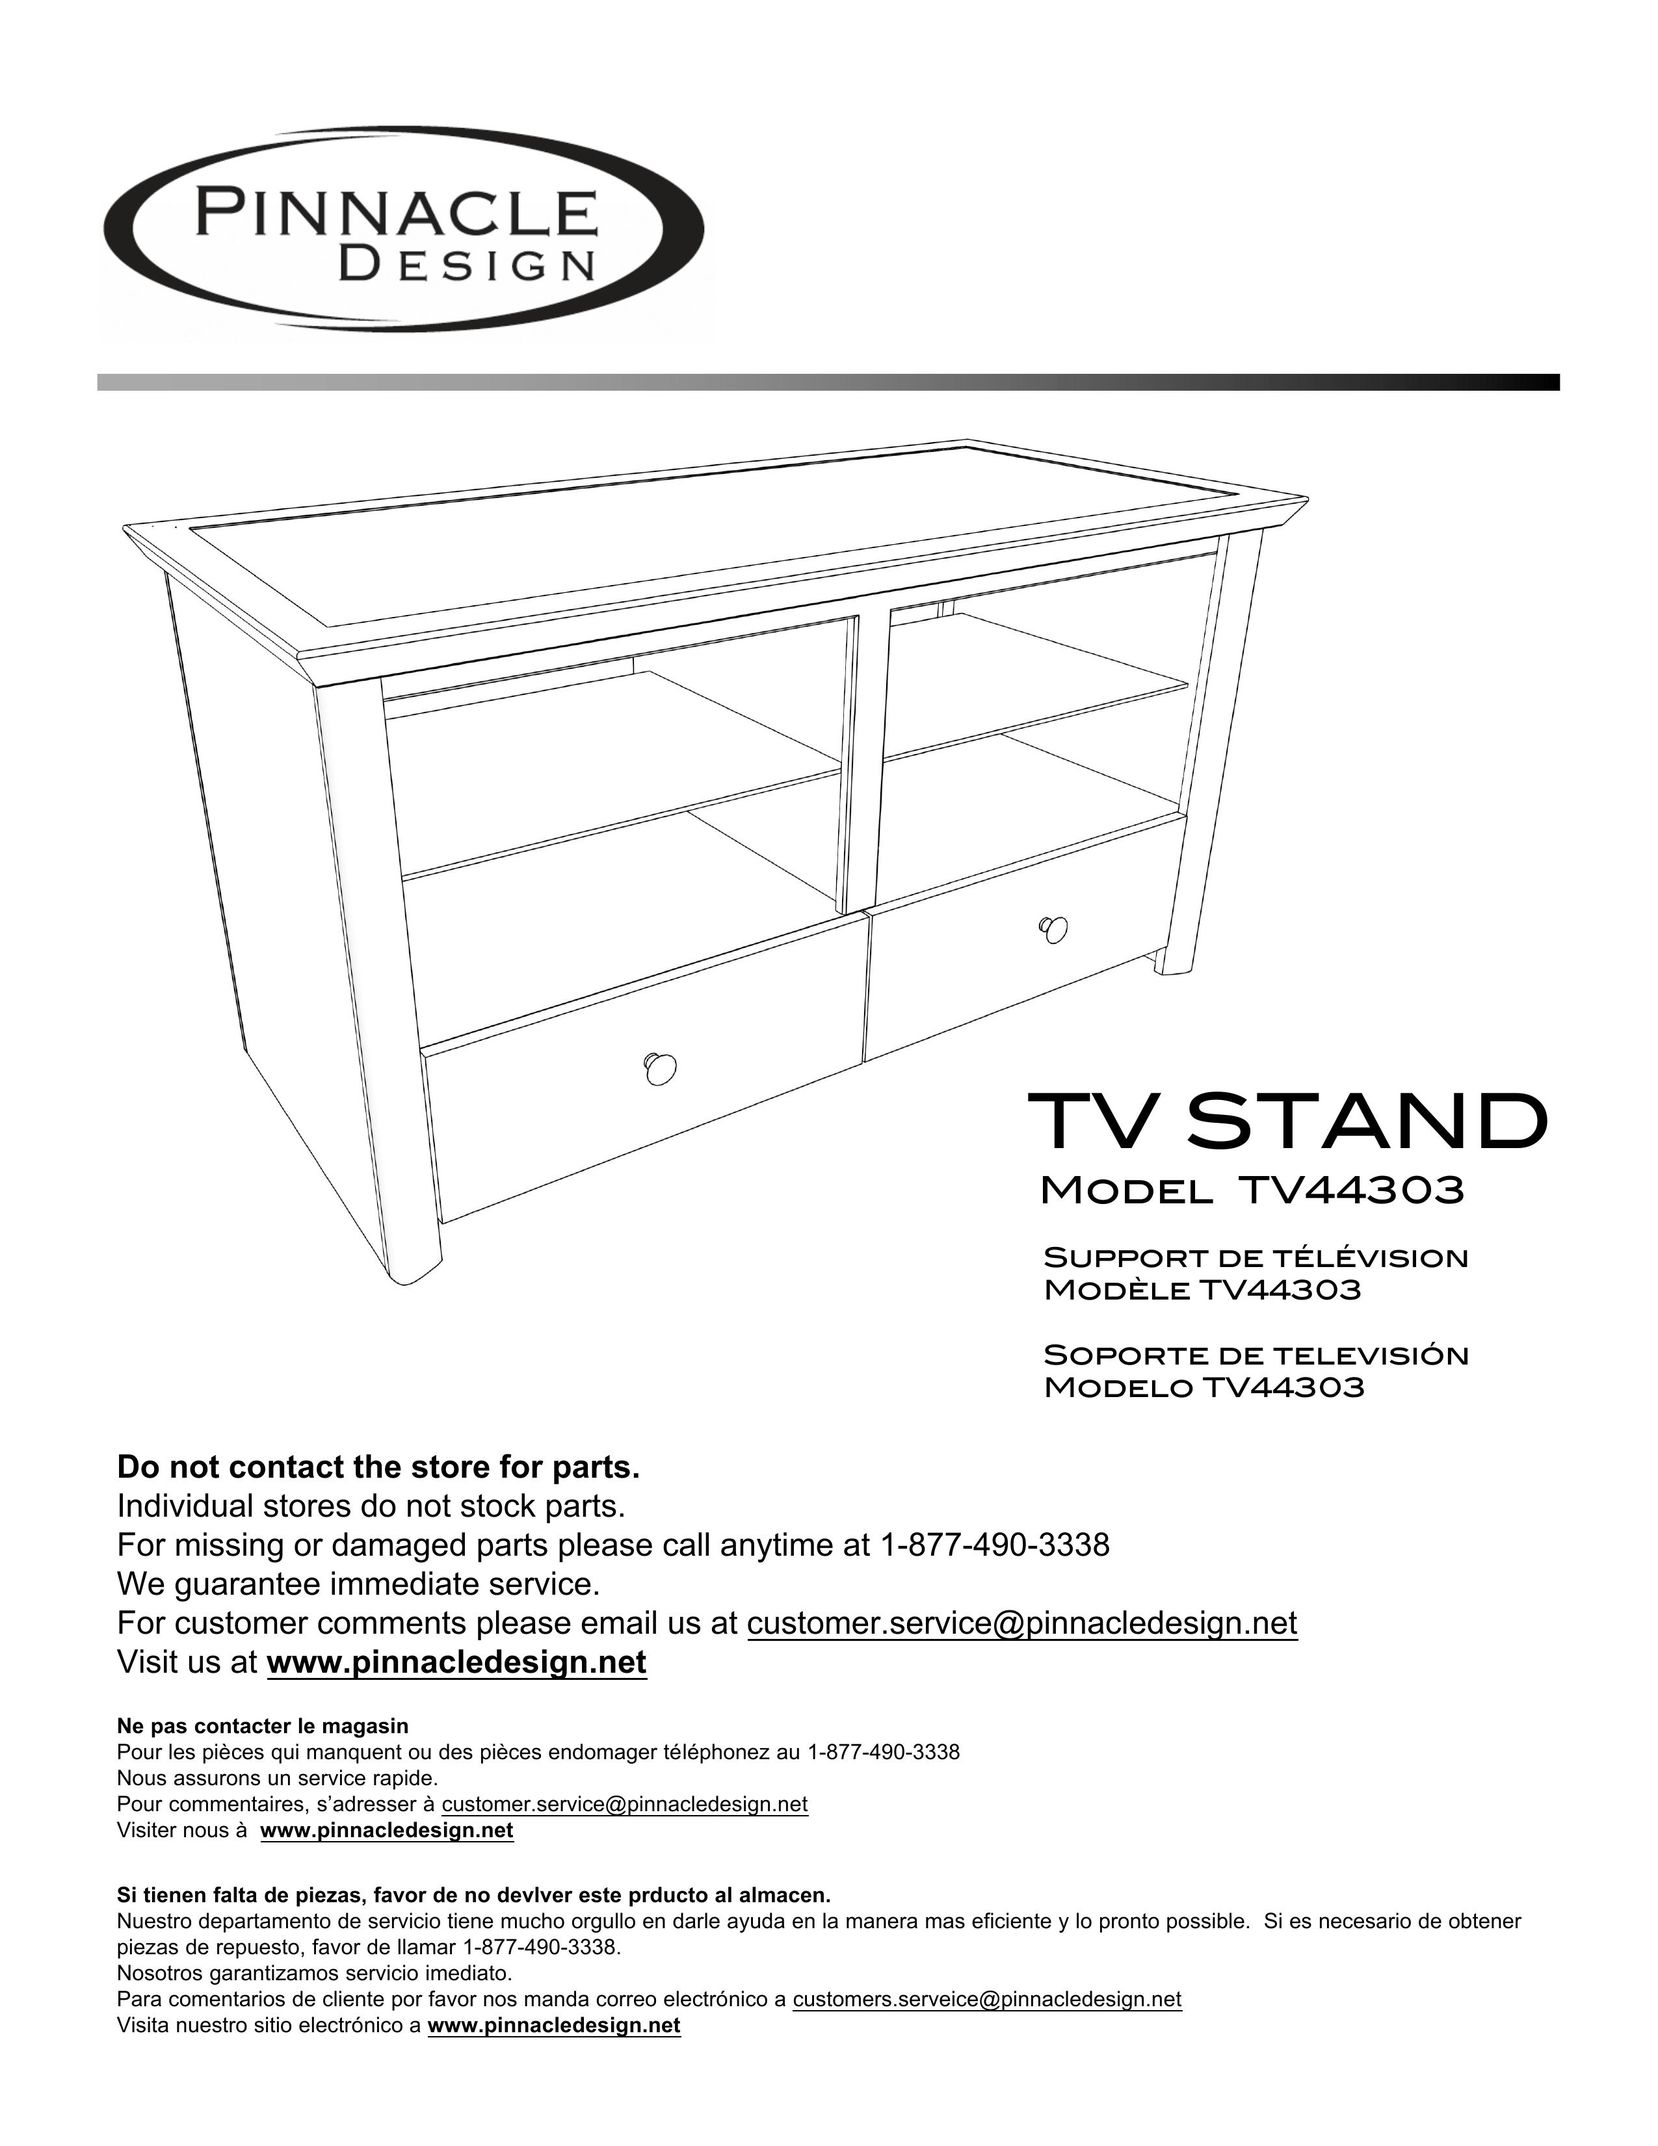 Pinnacle Design TV44303 TV Video Accessories User Manual